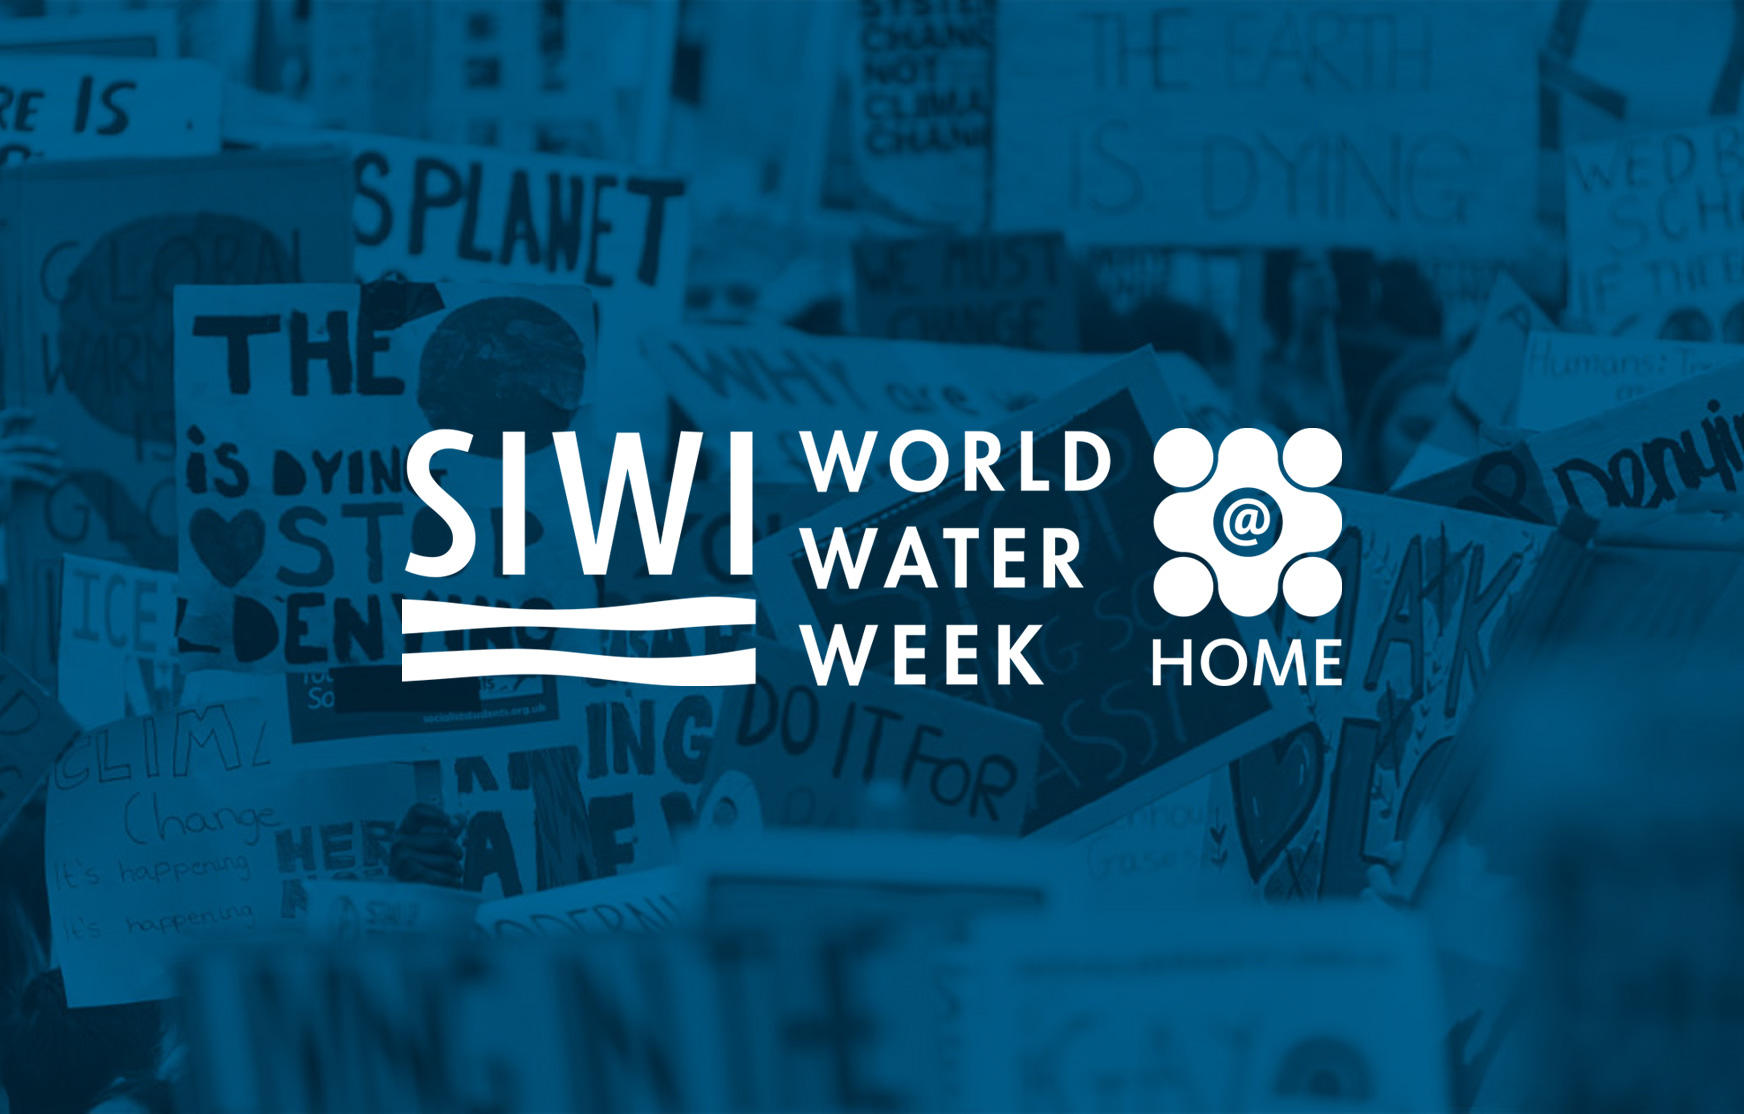 World Water Week 2020: 24-28 August_40.1